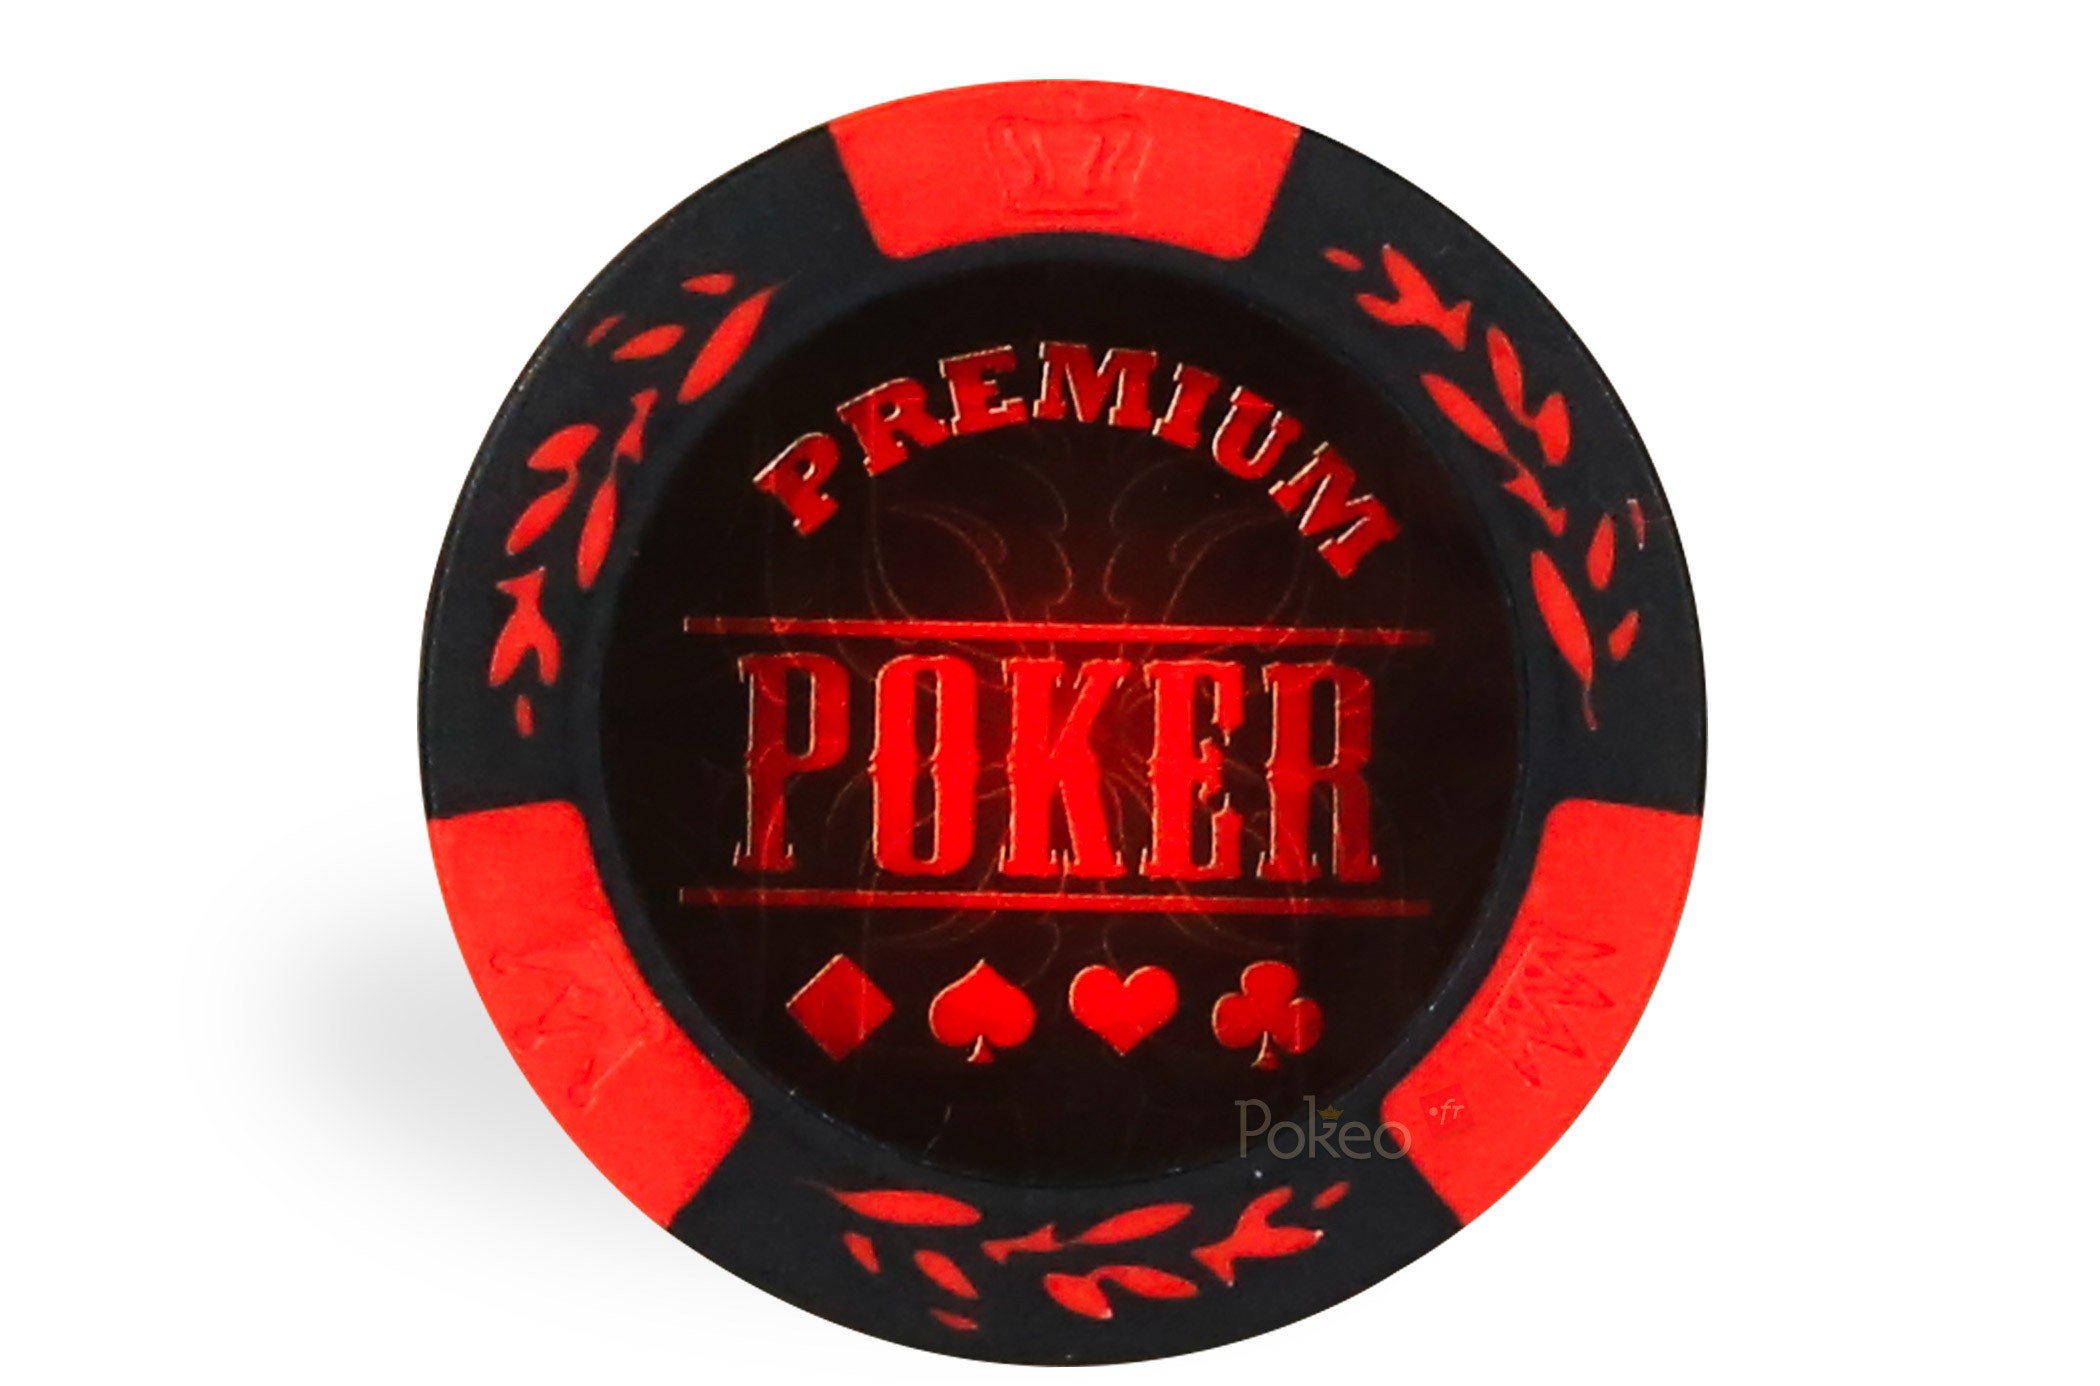 fusion poker